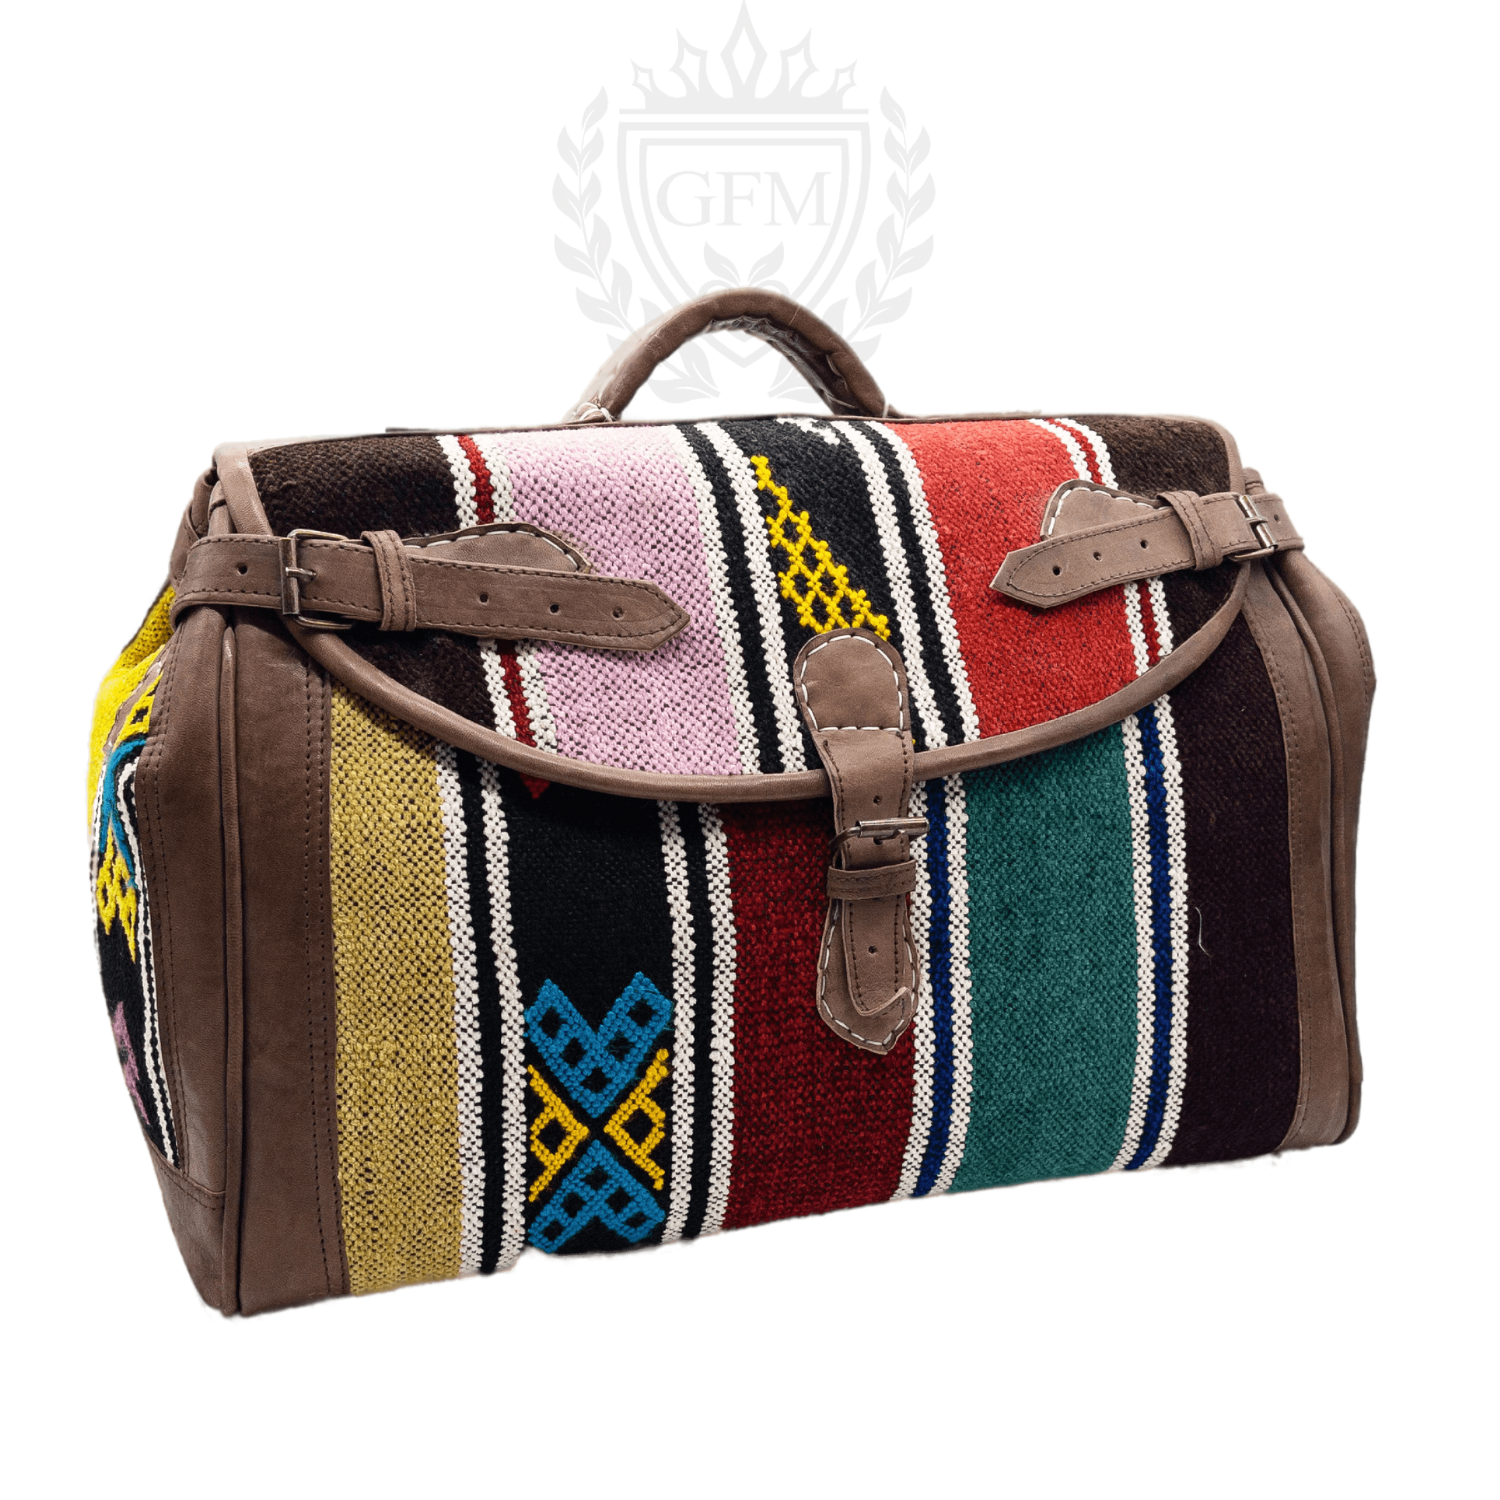 Unisex Duffel Bag with Kilim Accent - Handmade Boho Travel Bag